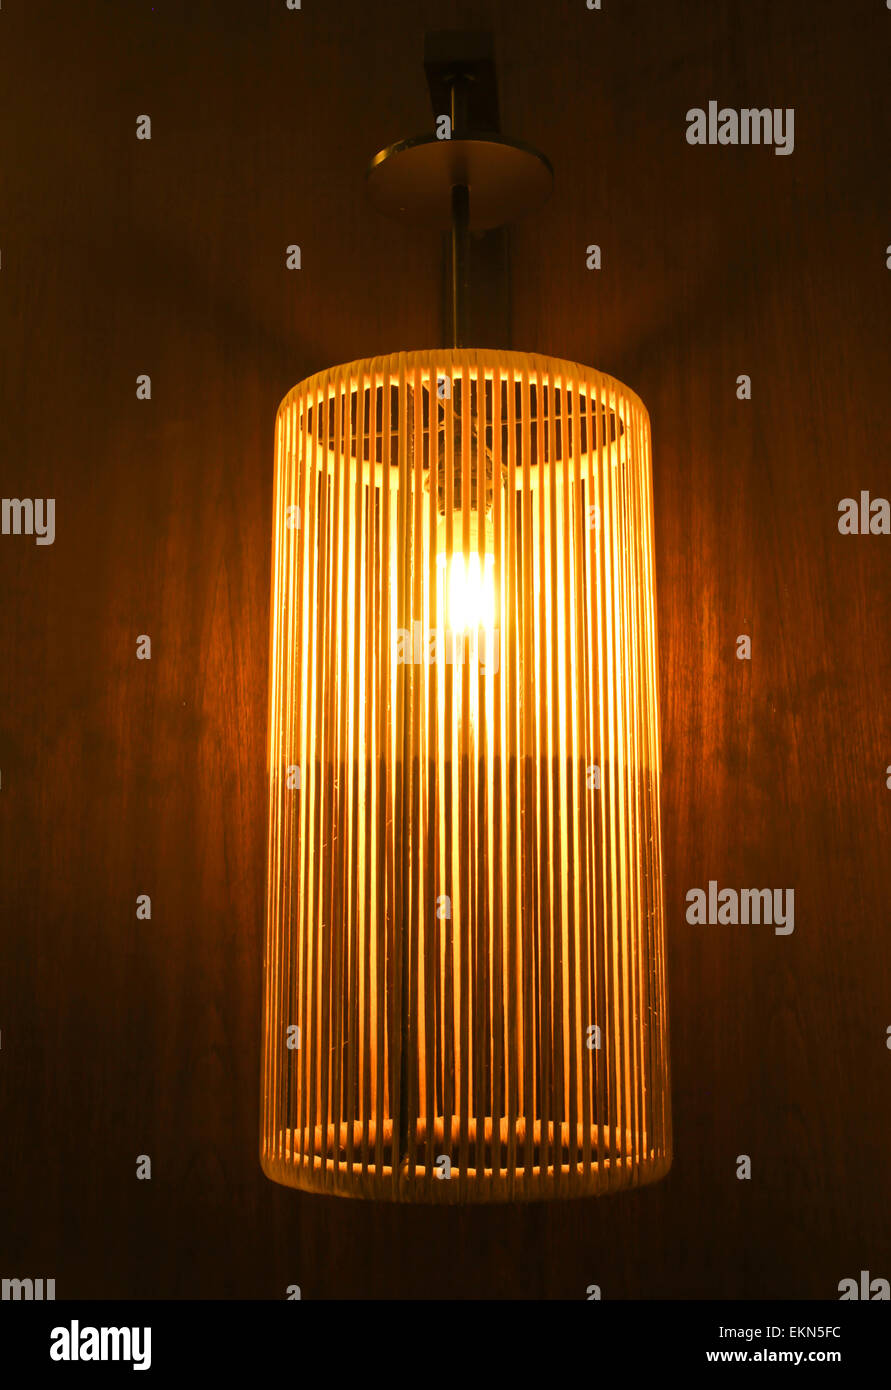 Handicraft electric lamp on wall Stock Photo